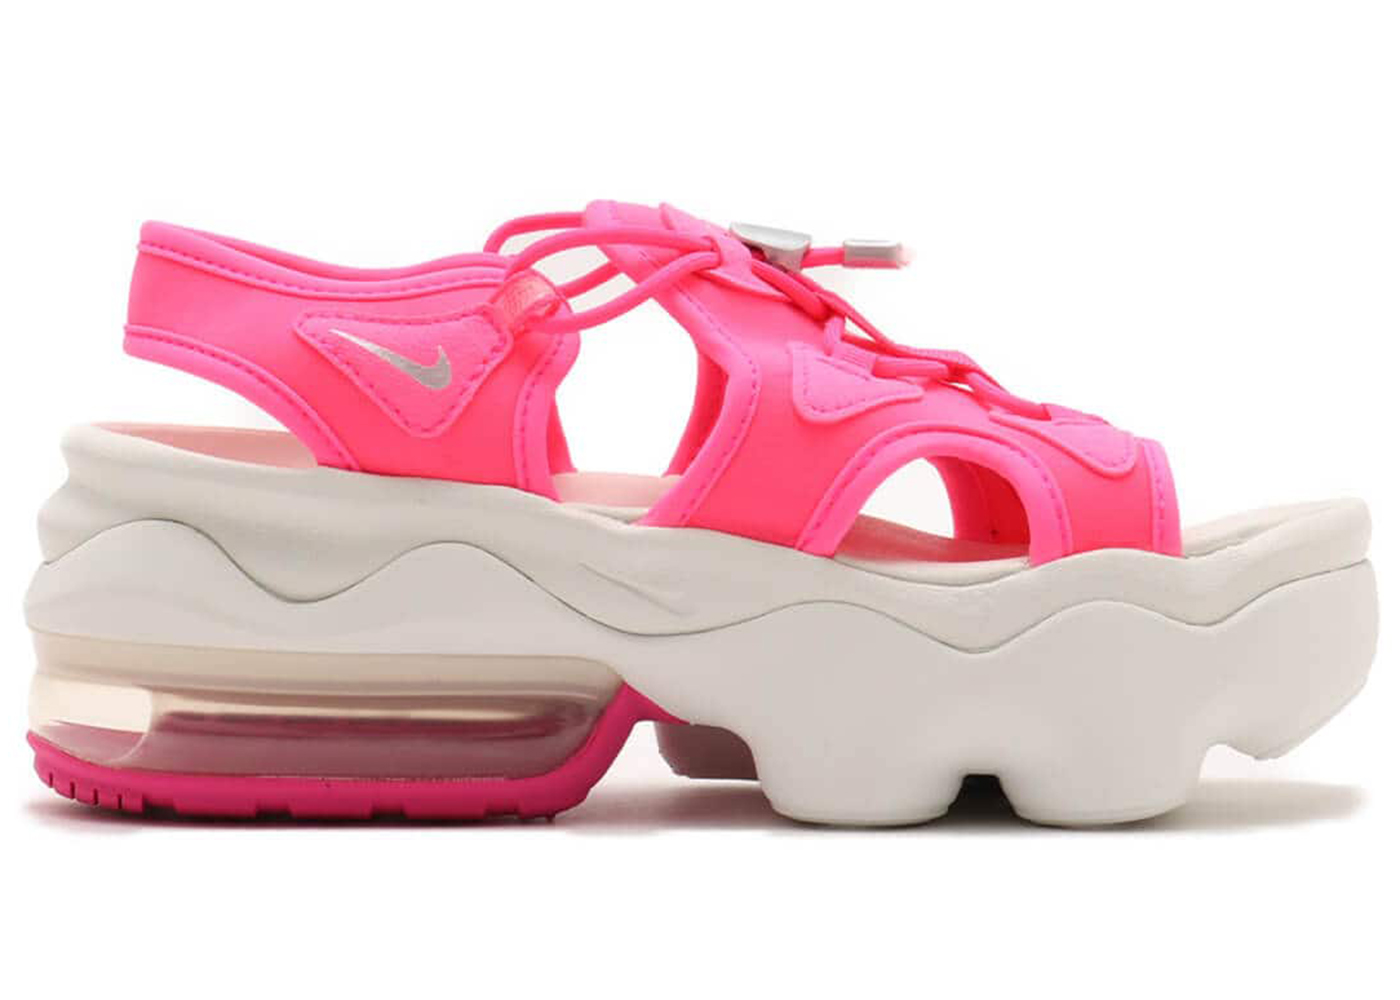 Nike Air Max Koko Hyper Pink (Women's) - CI8798-603 - GB